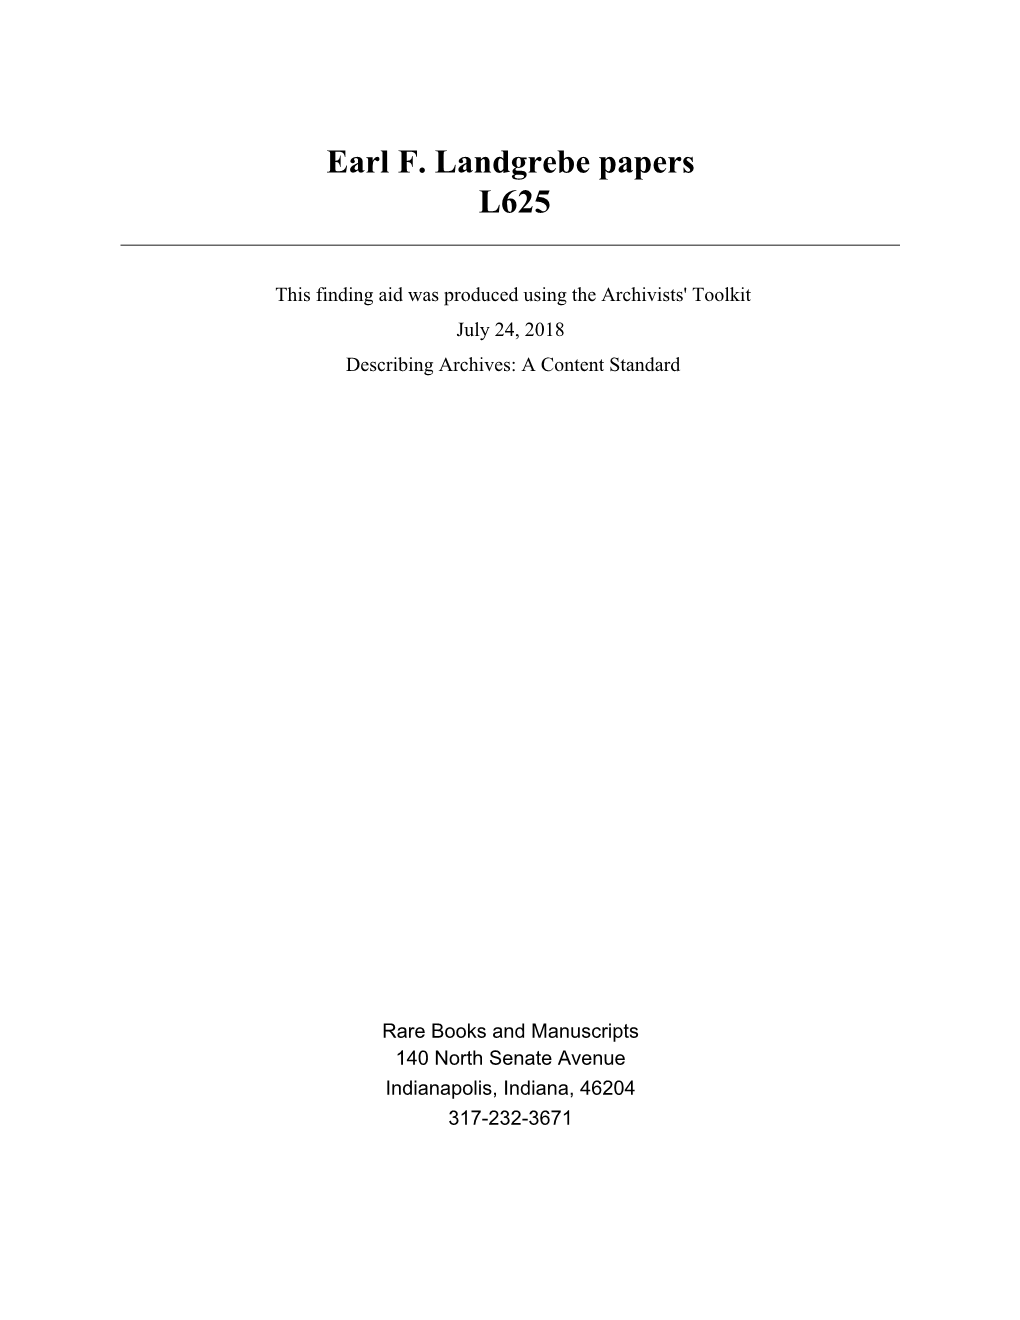 Earl F. Landgrebe Papers L625